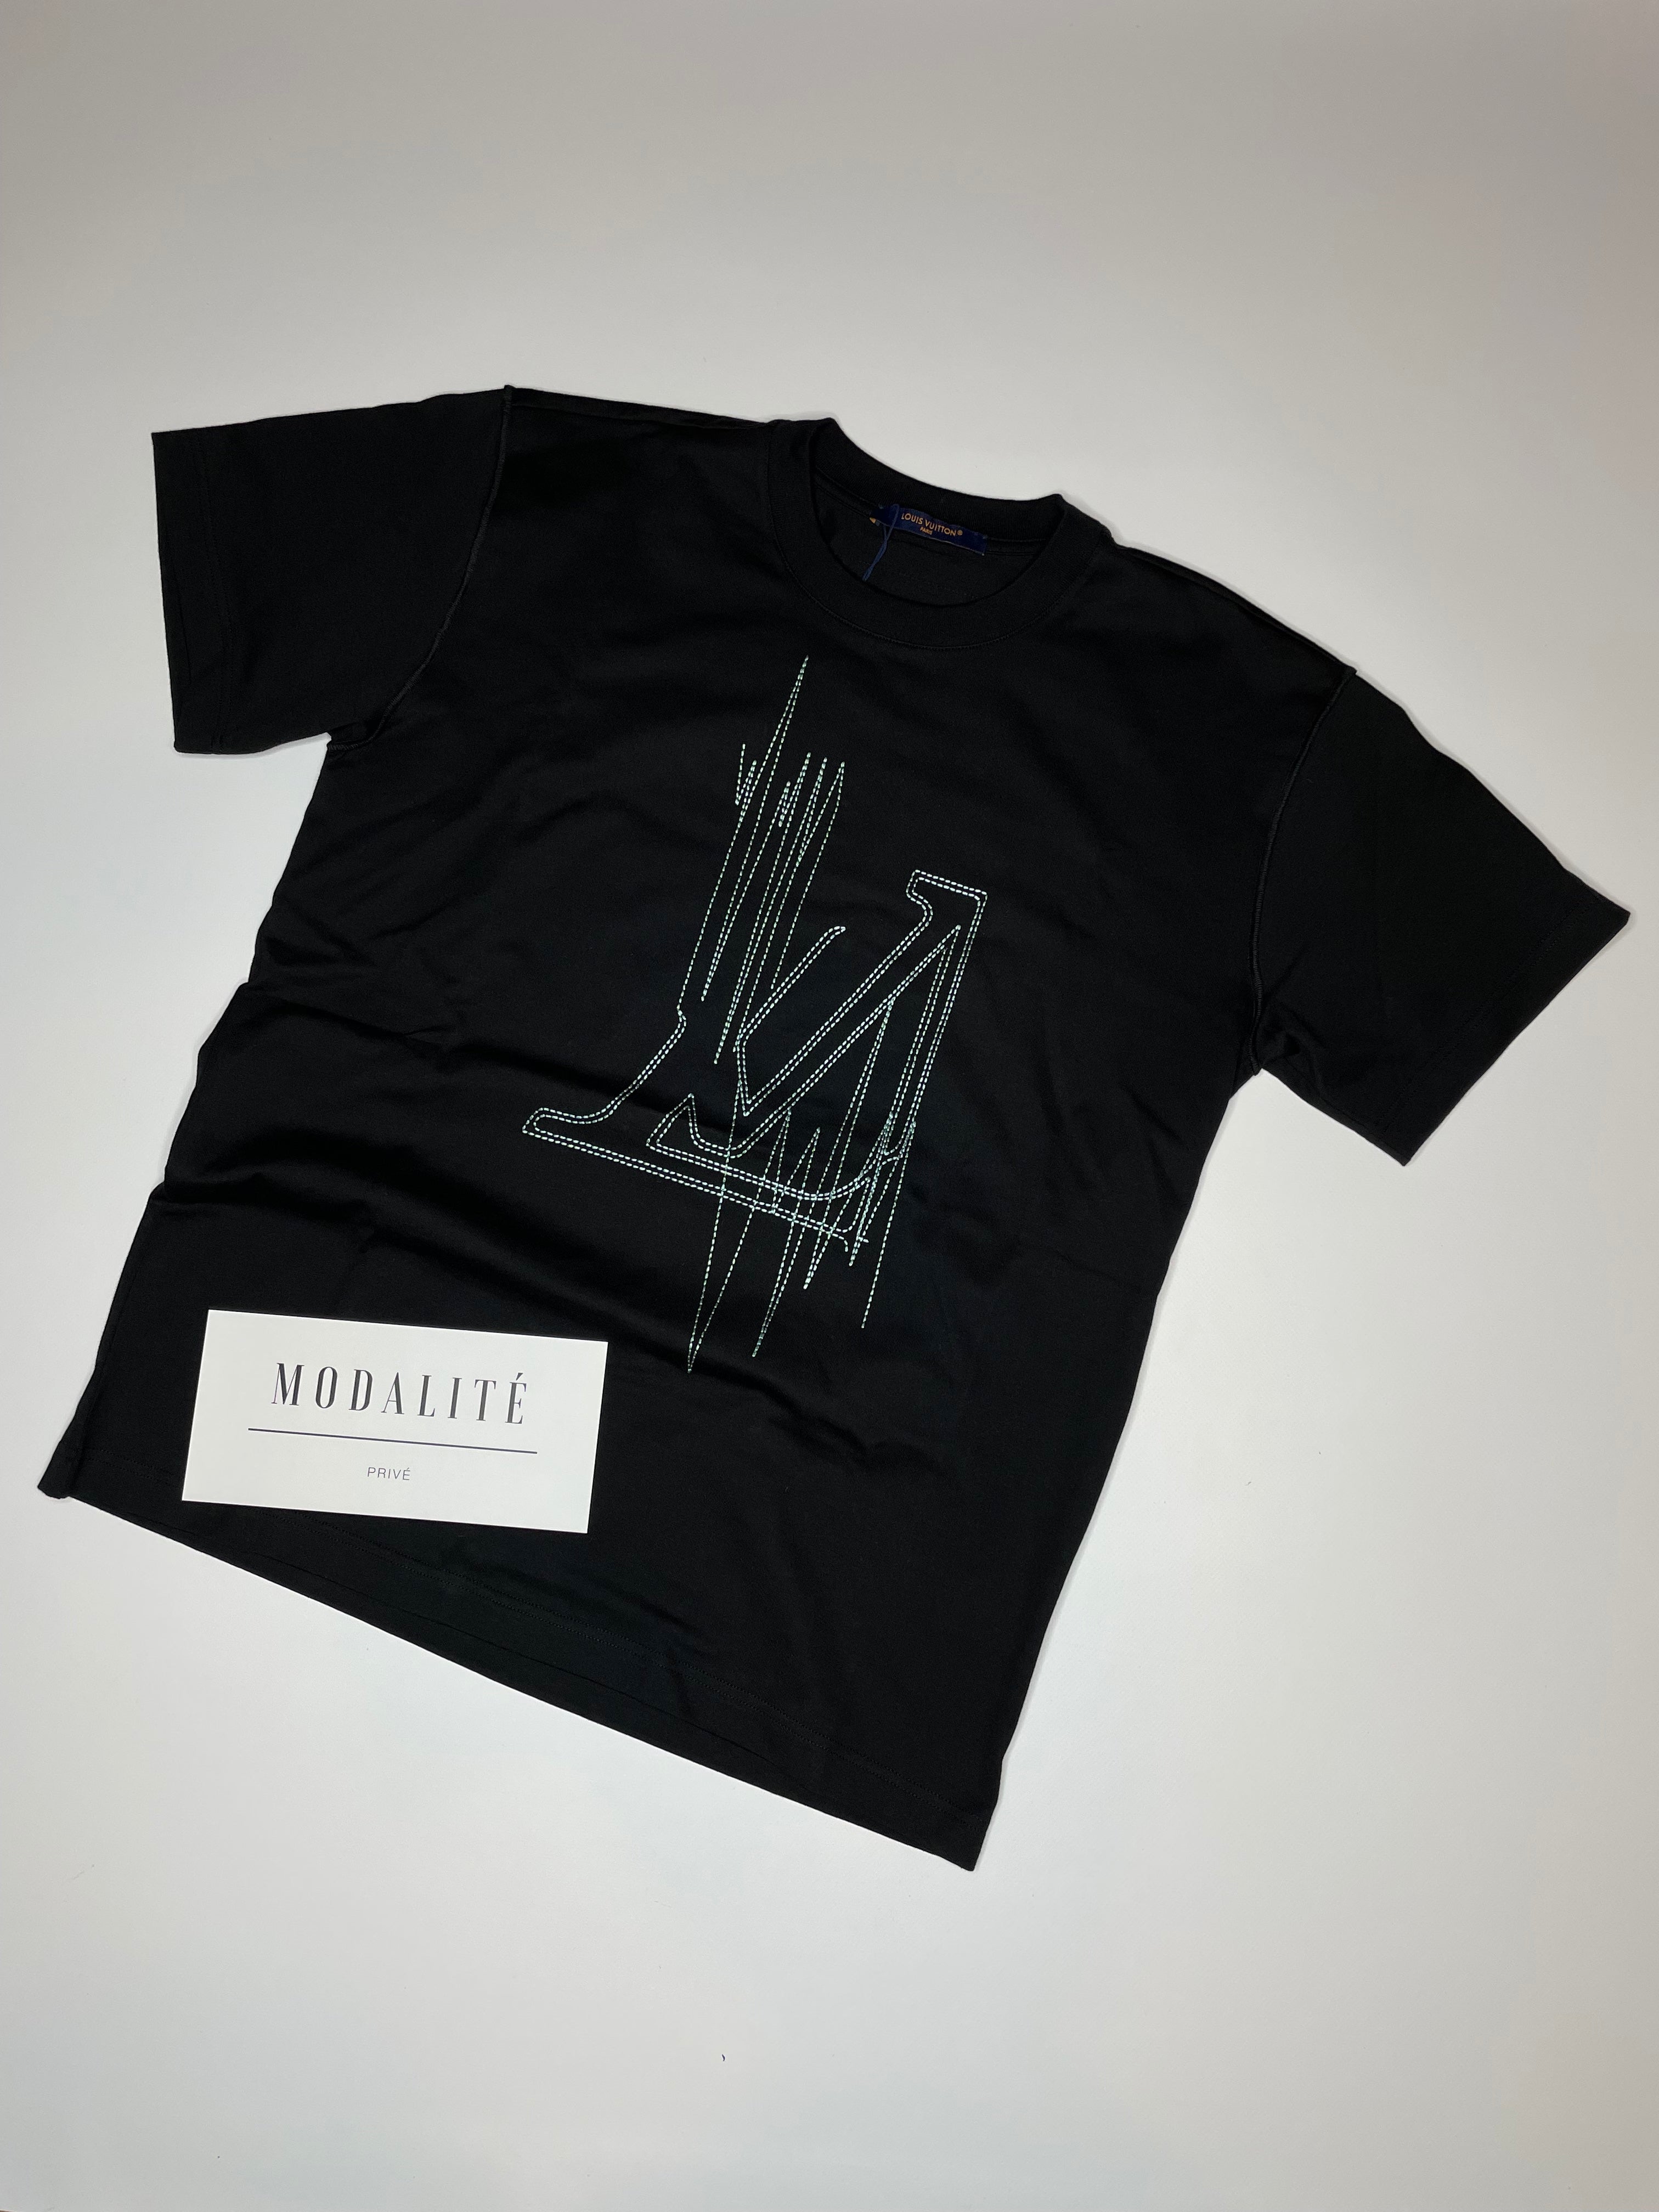 Louis Vuitton - T-Shirt - Black